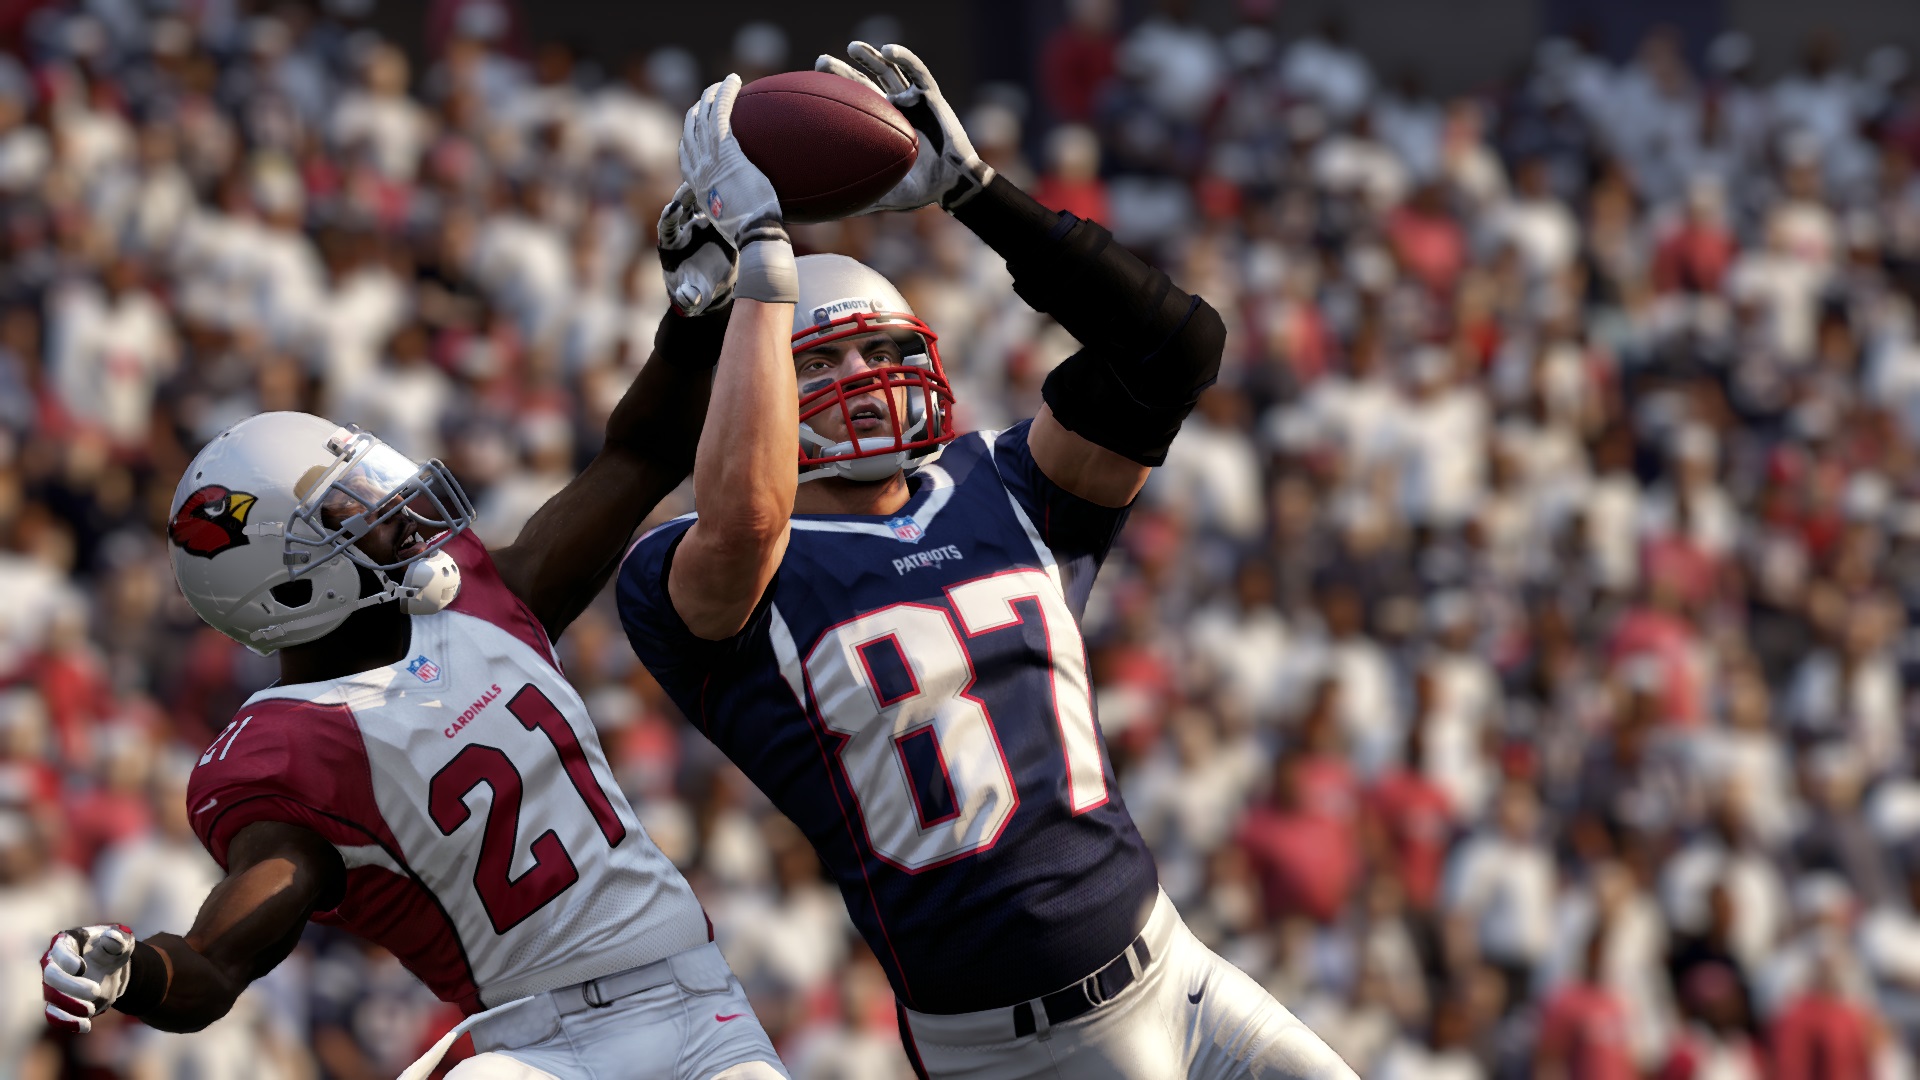 Video Game Madden NFL 16 HD Wallpaper | Background Image